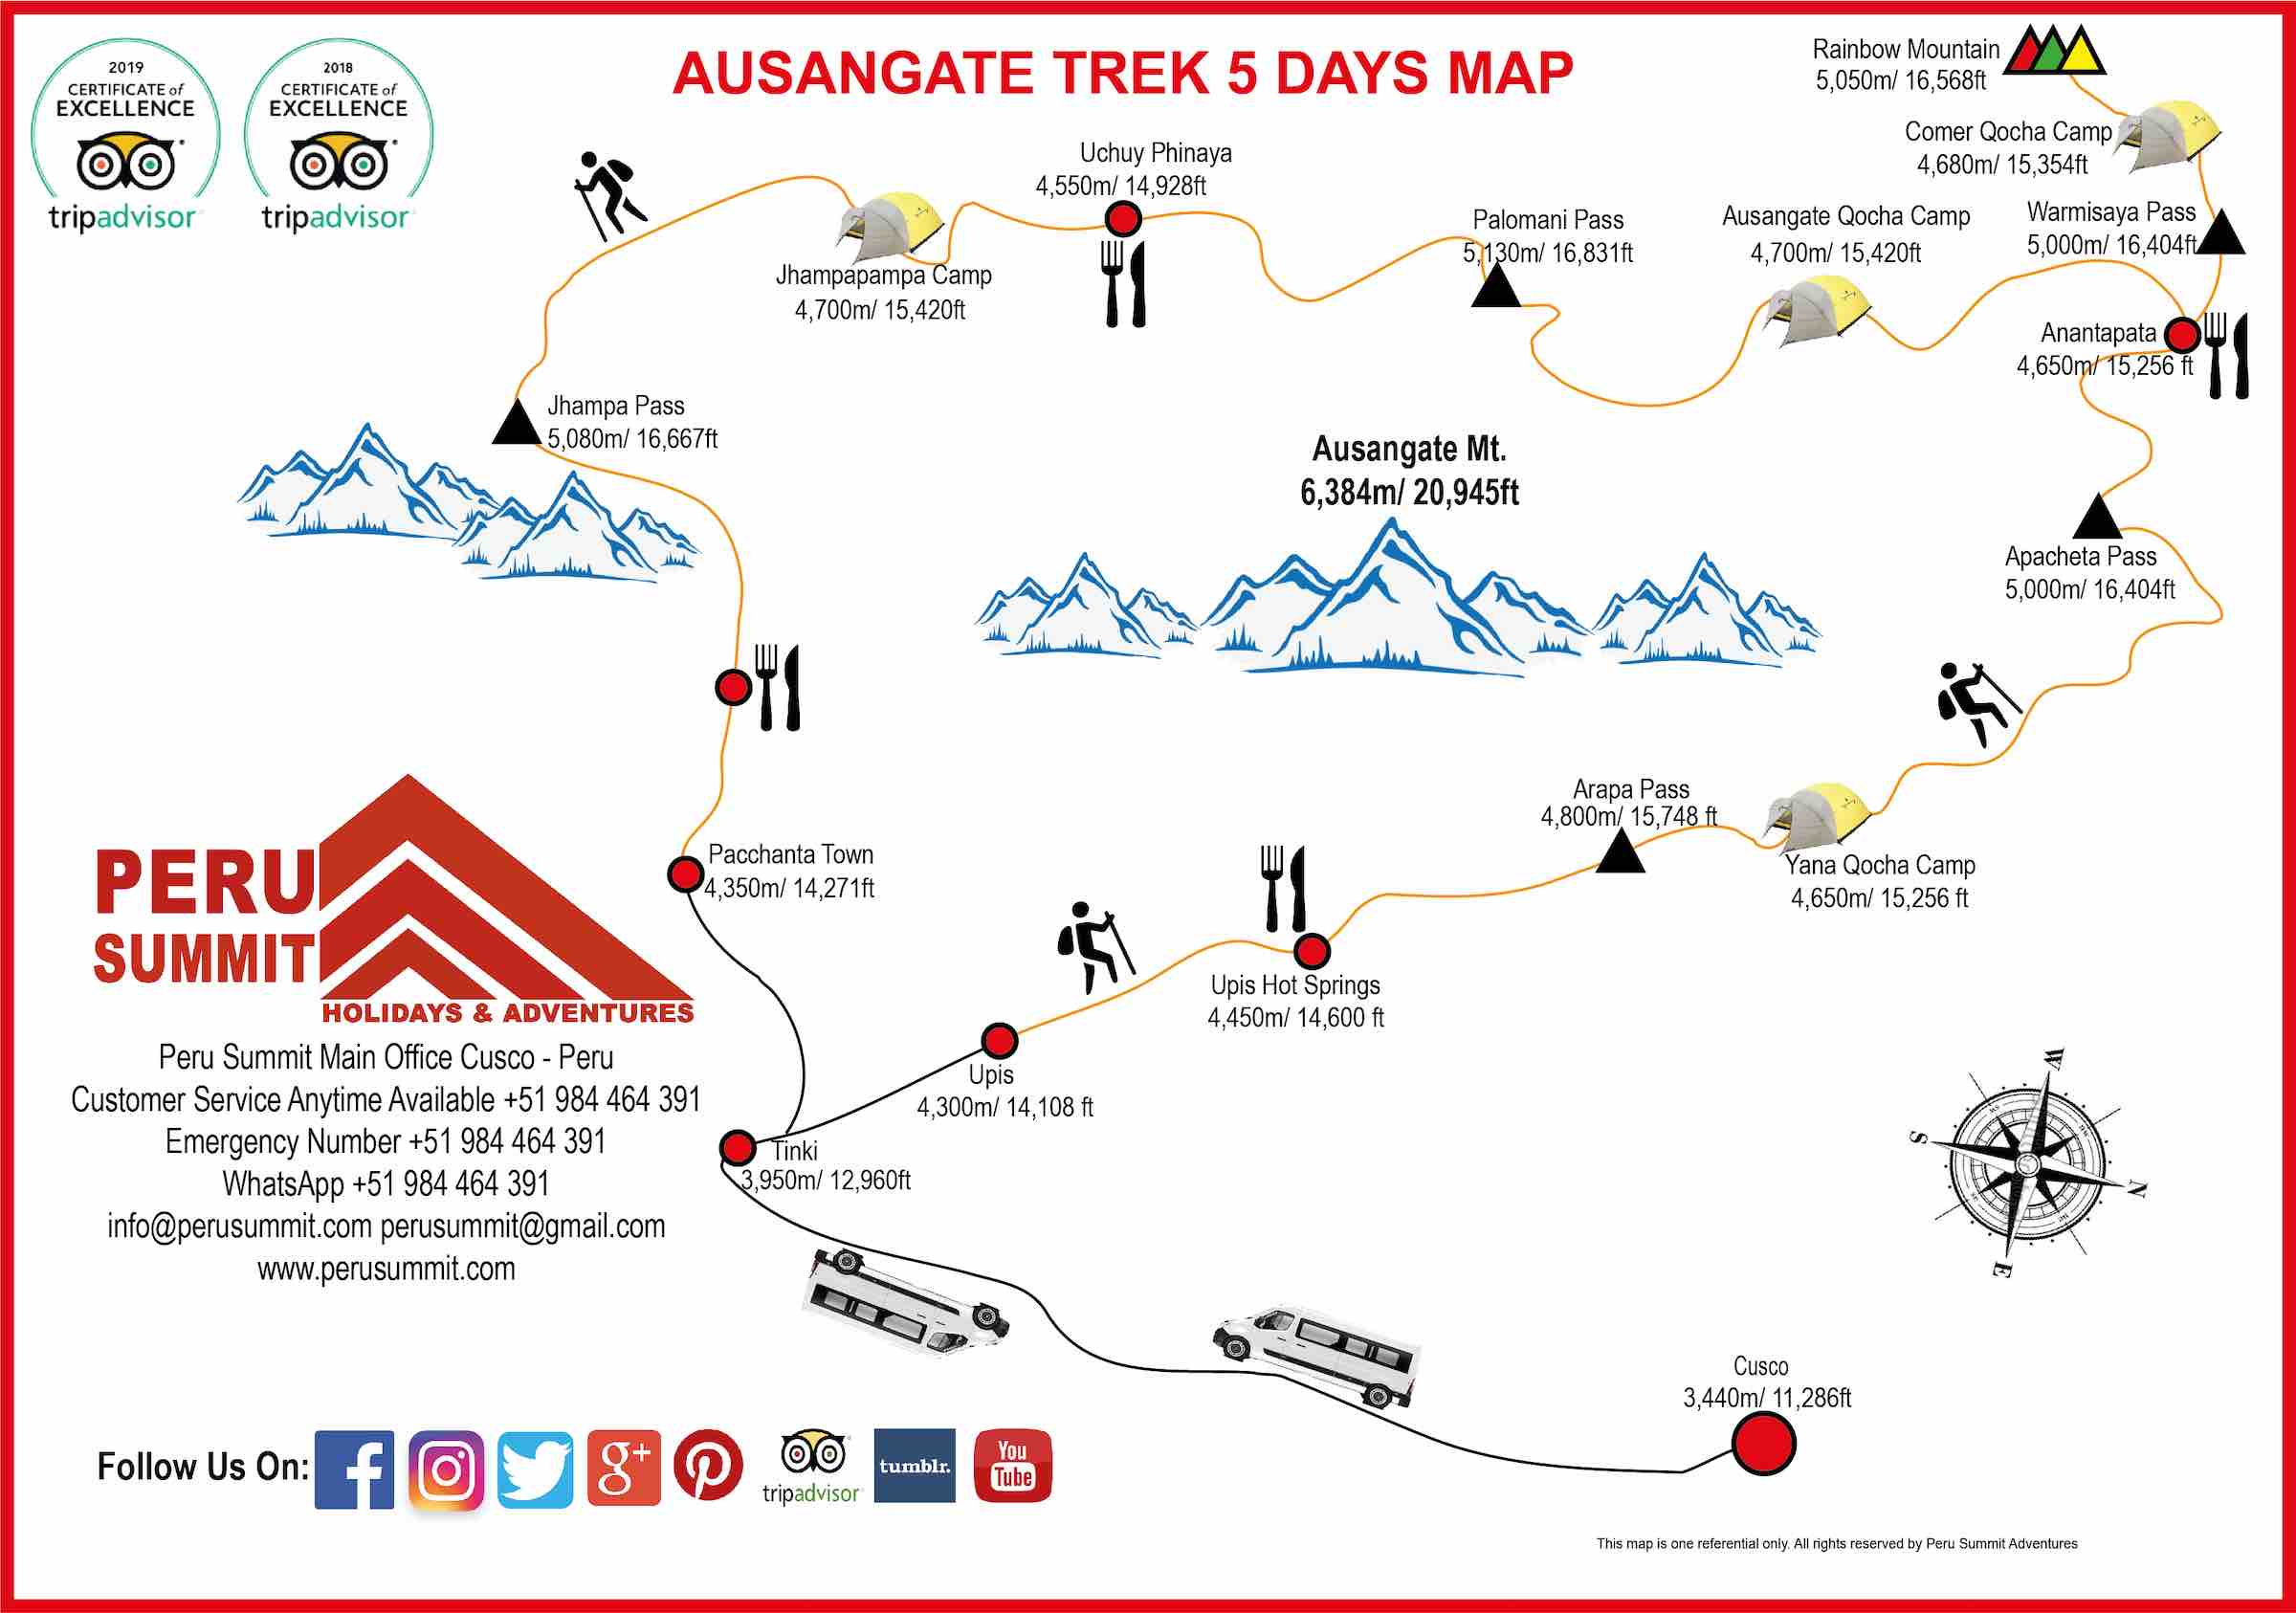 Ausangate Trek 5 days map